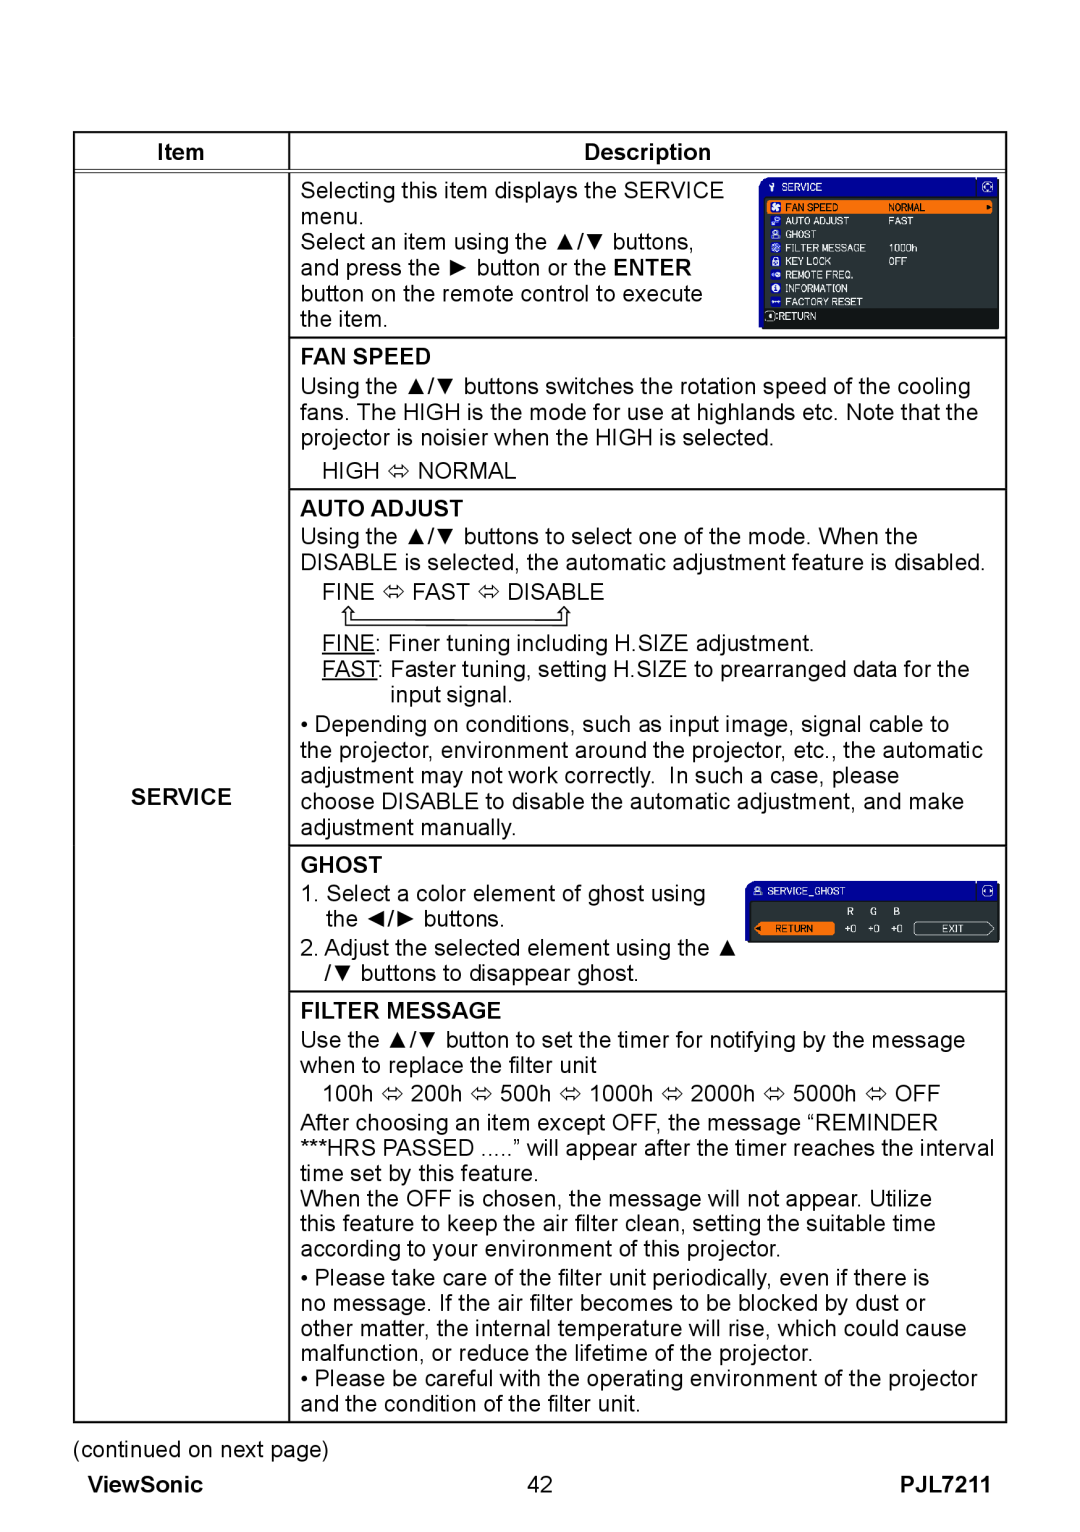 ViewSonic PJL7211 manual Item, Description, Service, Fan Speed, Auto Adjust, Ghost, Filter Message, ViewSonic 